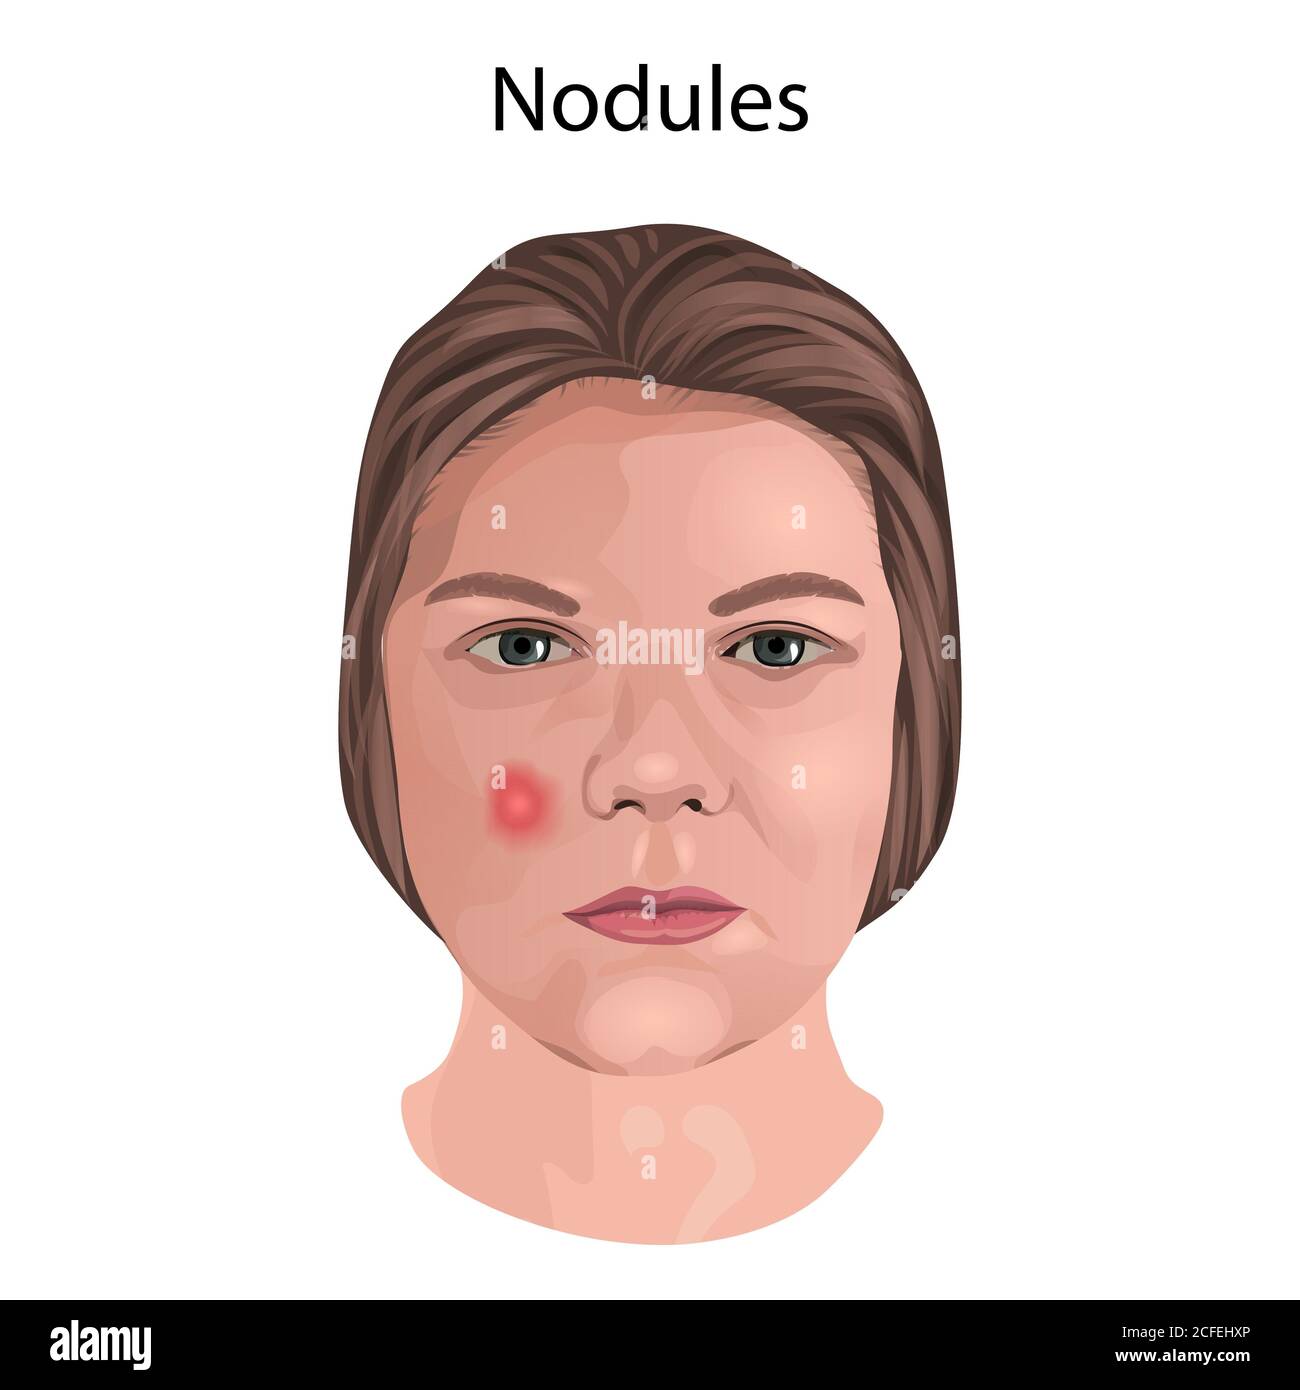 Nodules, illustration. Stock Photo